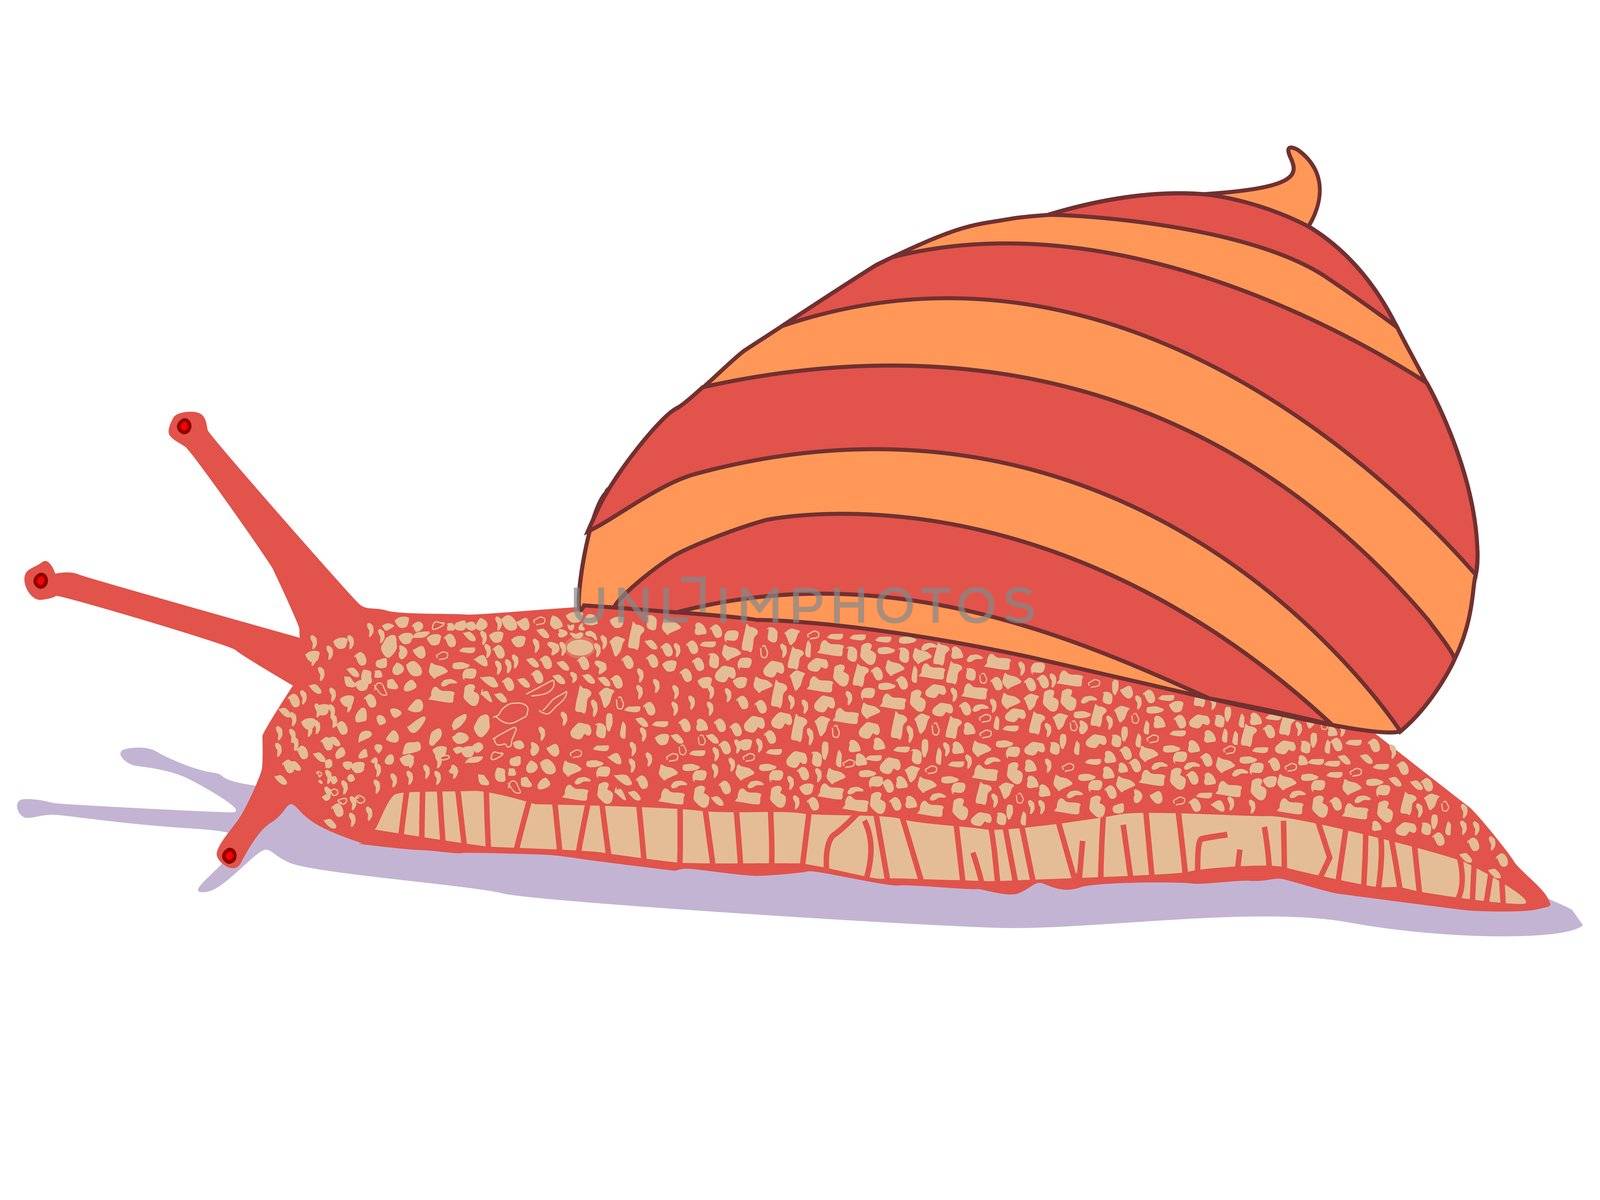 snail cartoon isolated on white background, abstract vector art illustration